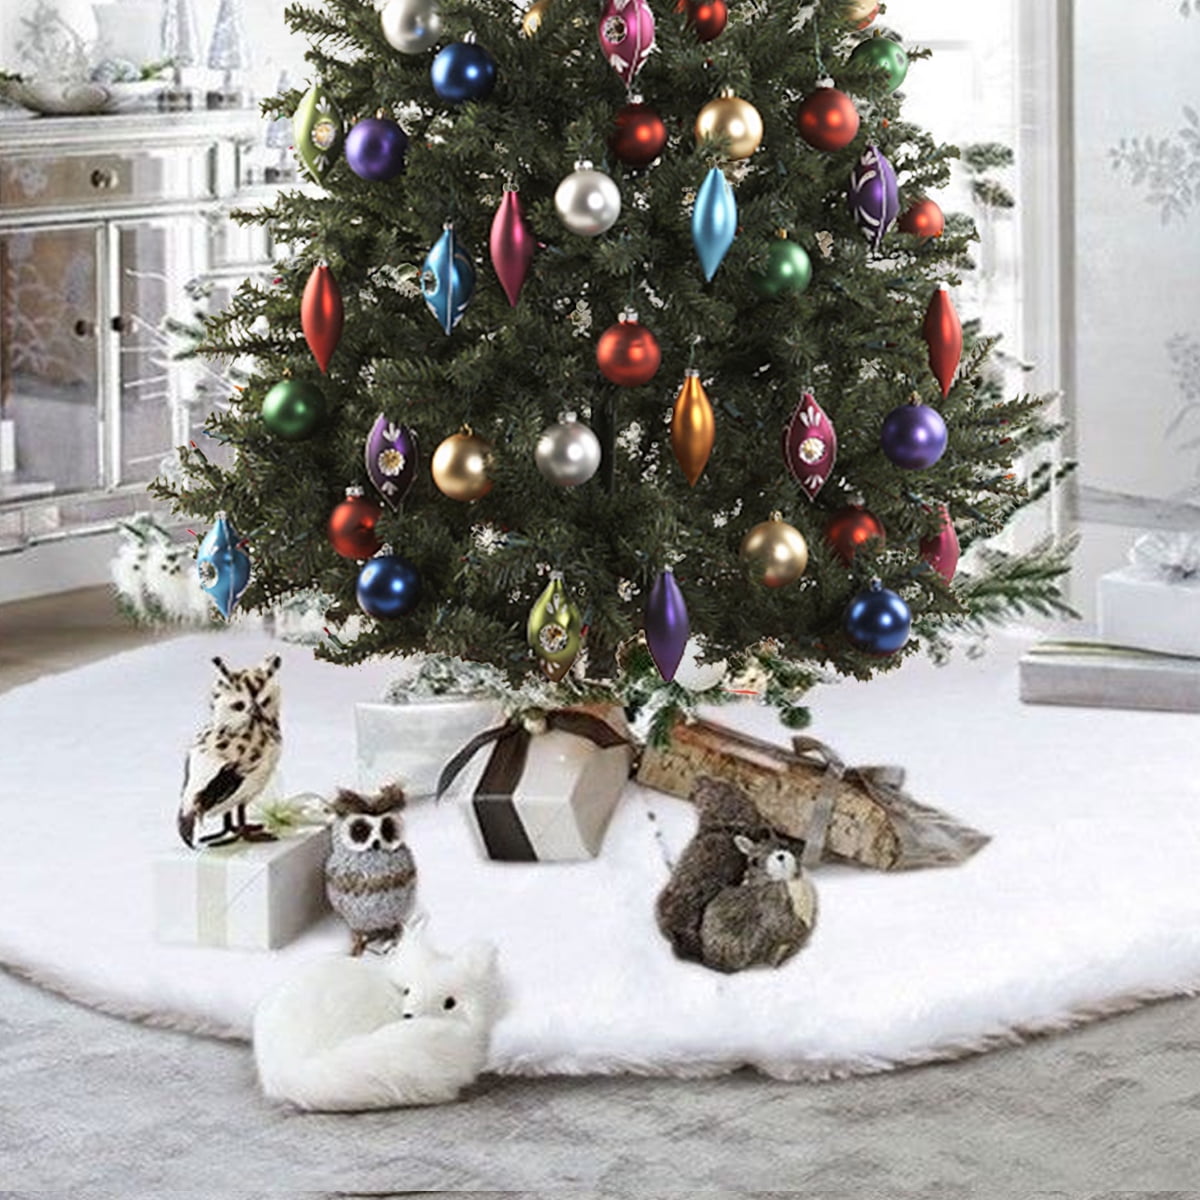 60//90cm Christmas Tree Skirt Base Fluffy Faux Fur Xmas Floor Mat Cover Decor